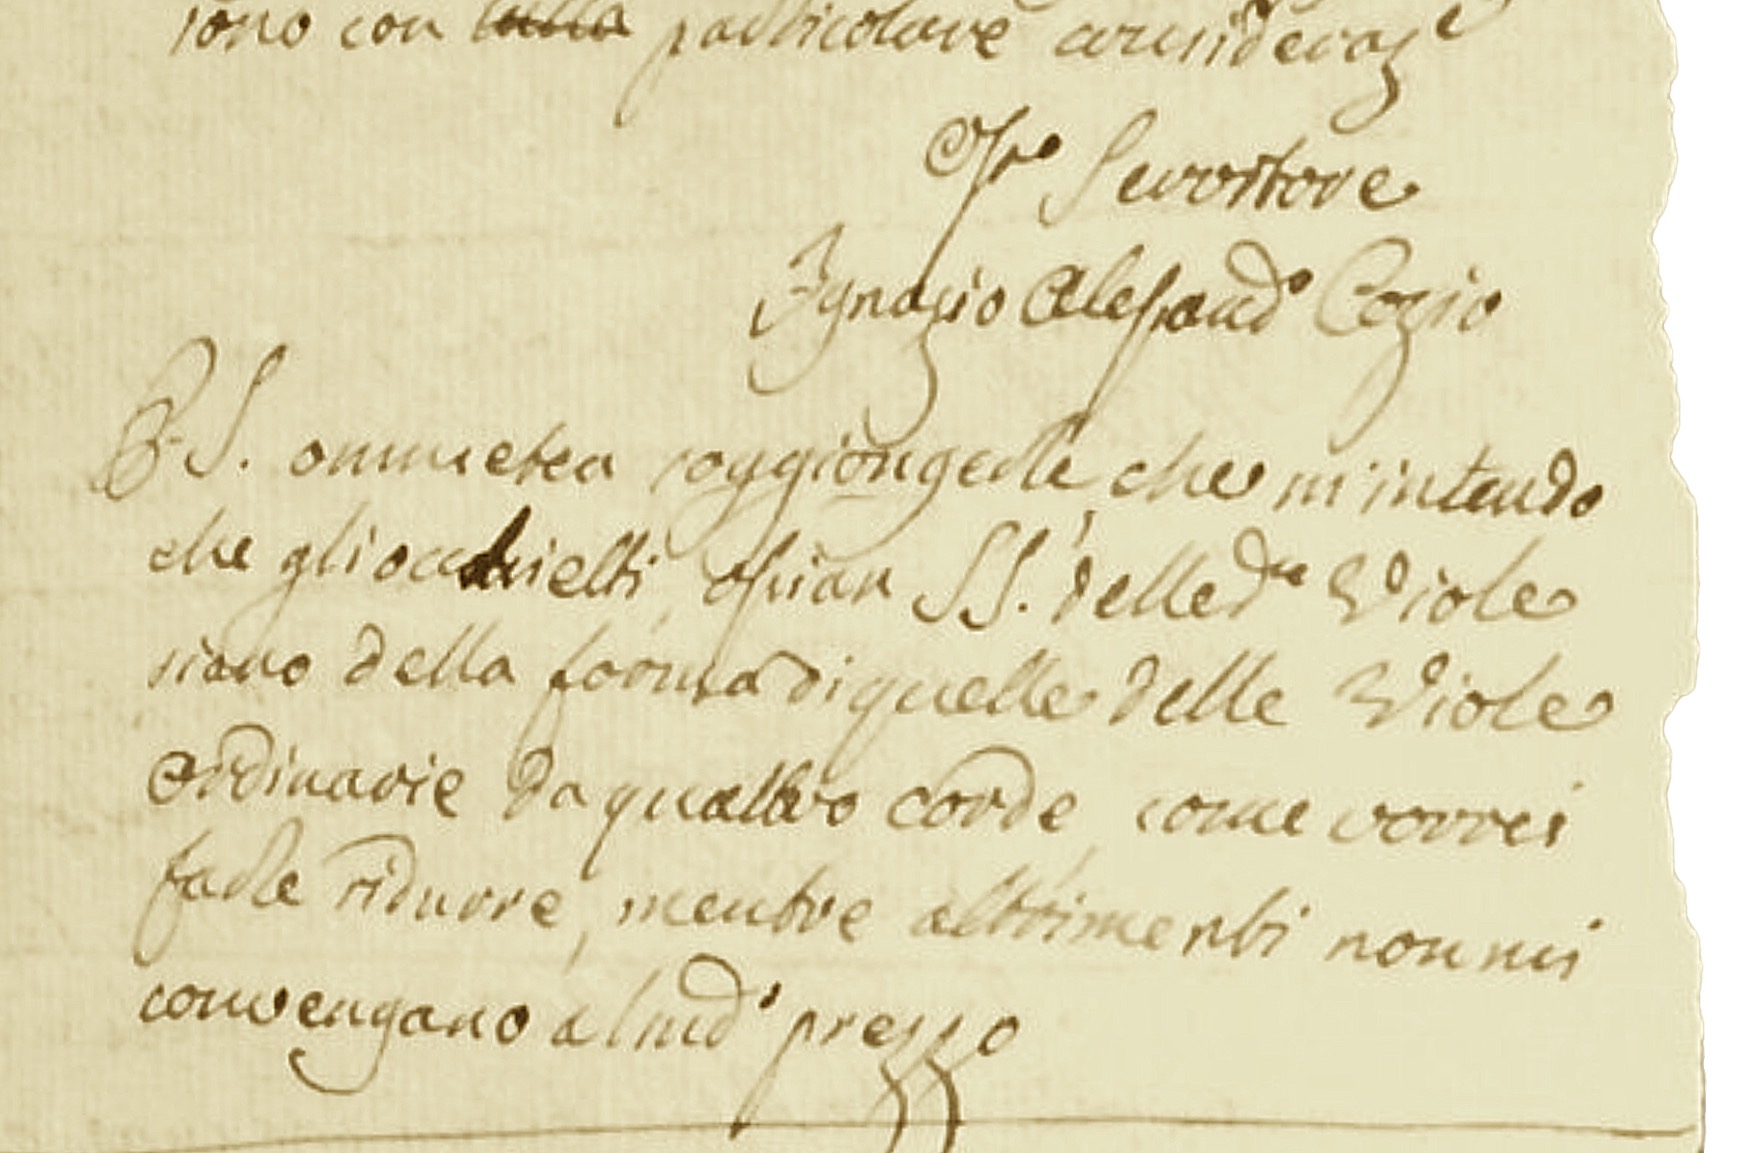 A letter from Count Cozio to Antonio II Stradivari